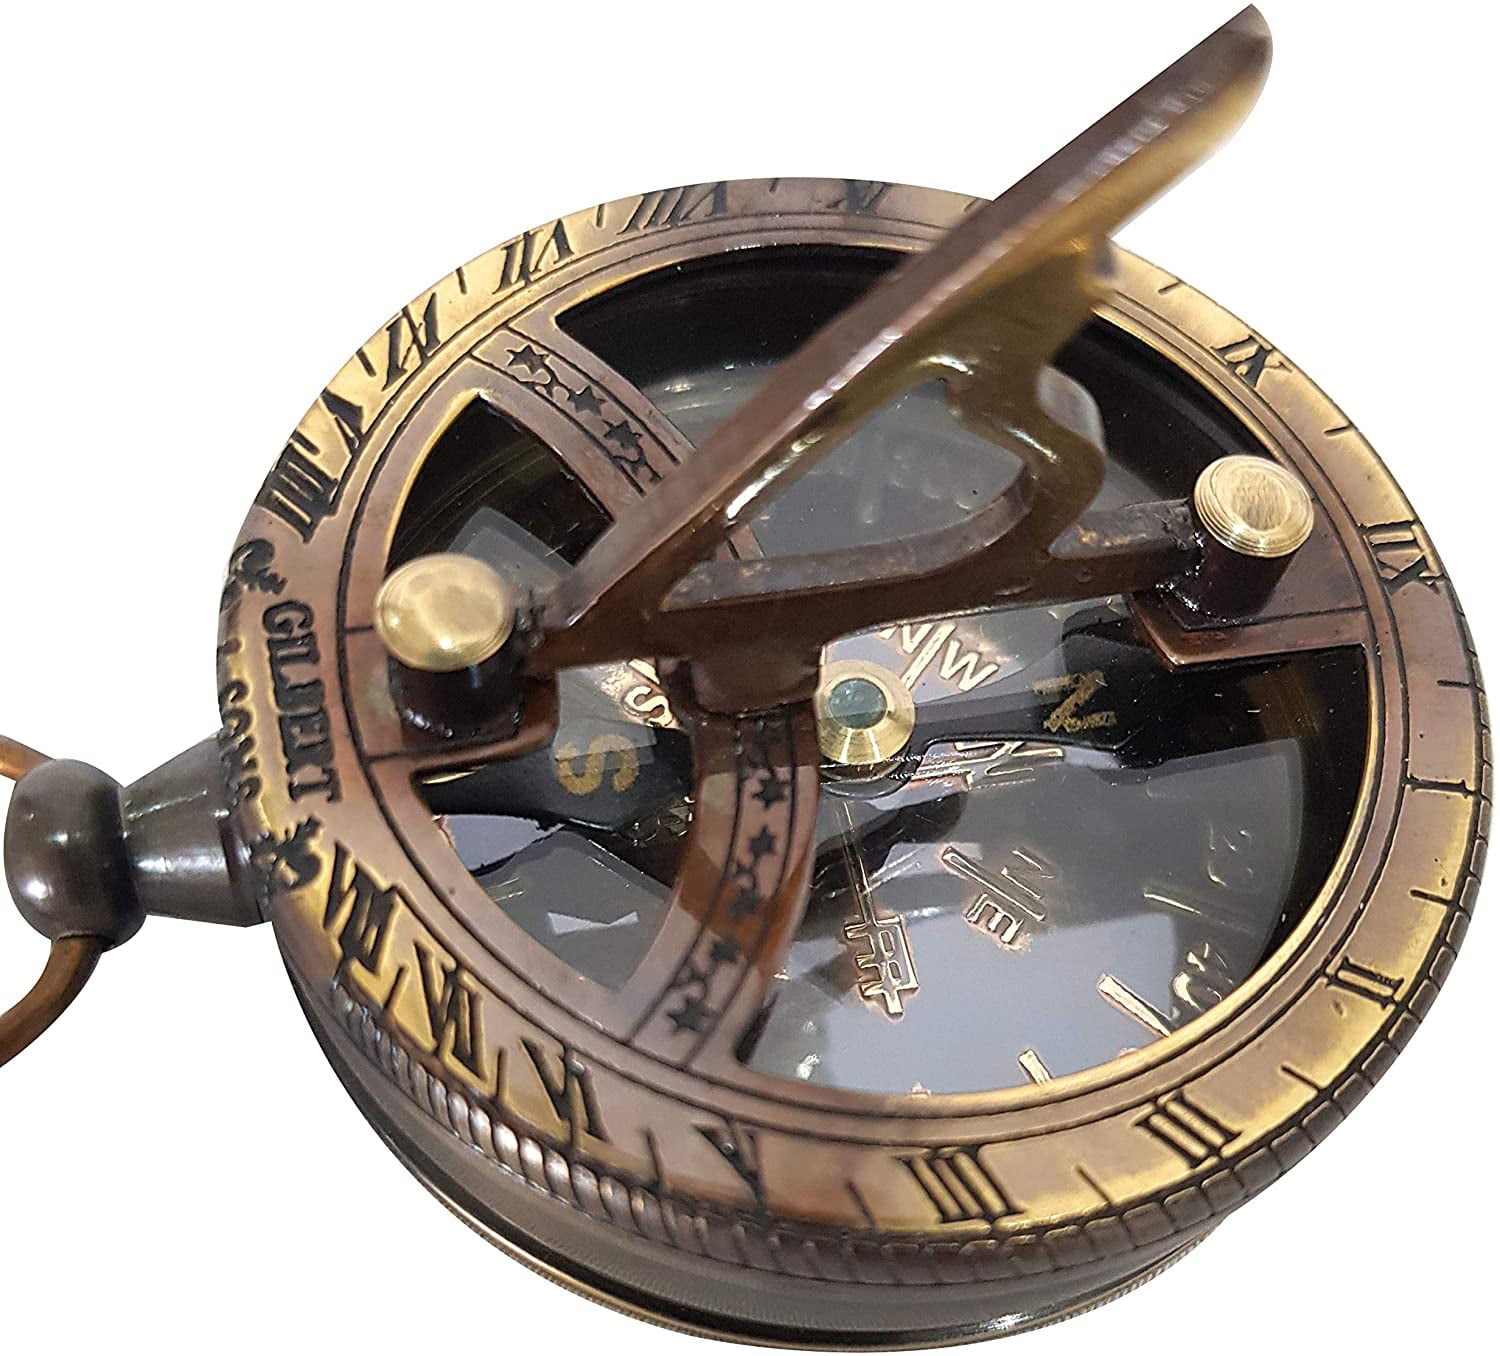 Brass Pocket Sundial Compass w/ Lid ~ Antique Finish ~ Nautical Maritime Style 